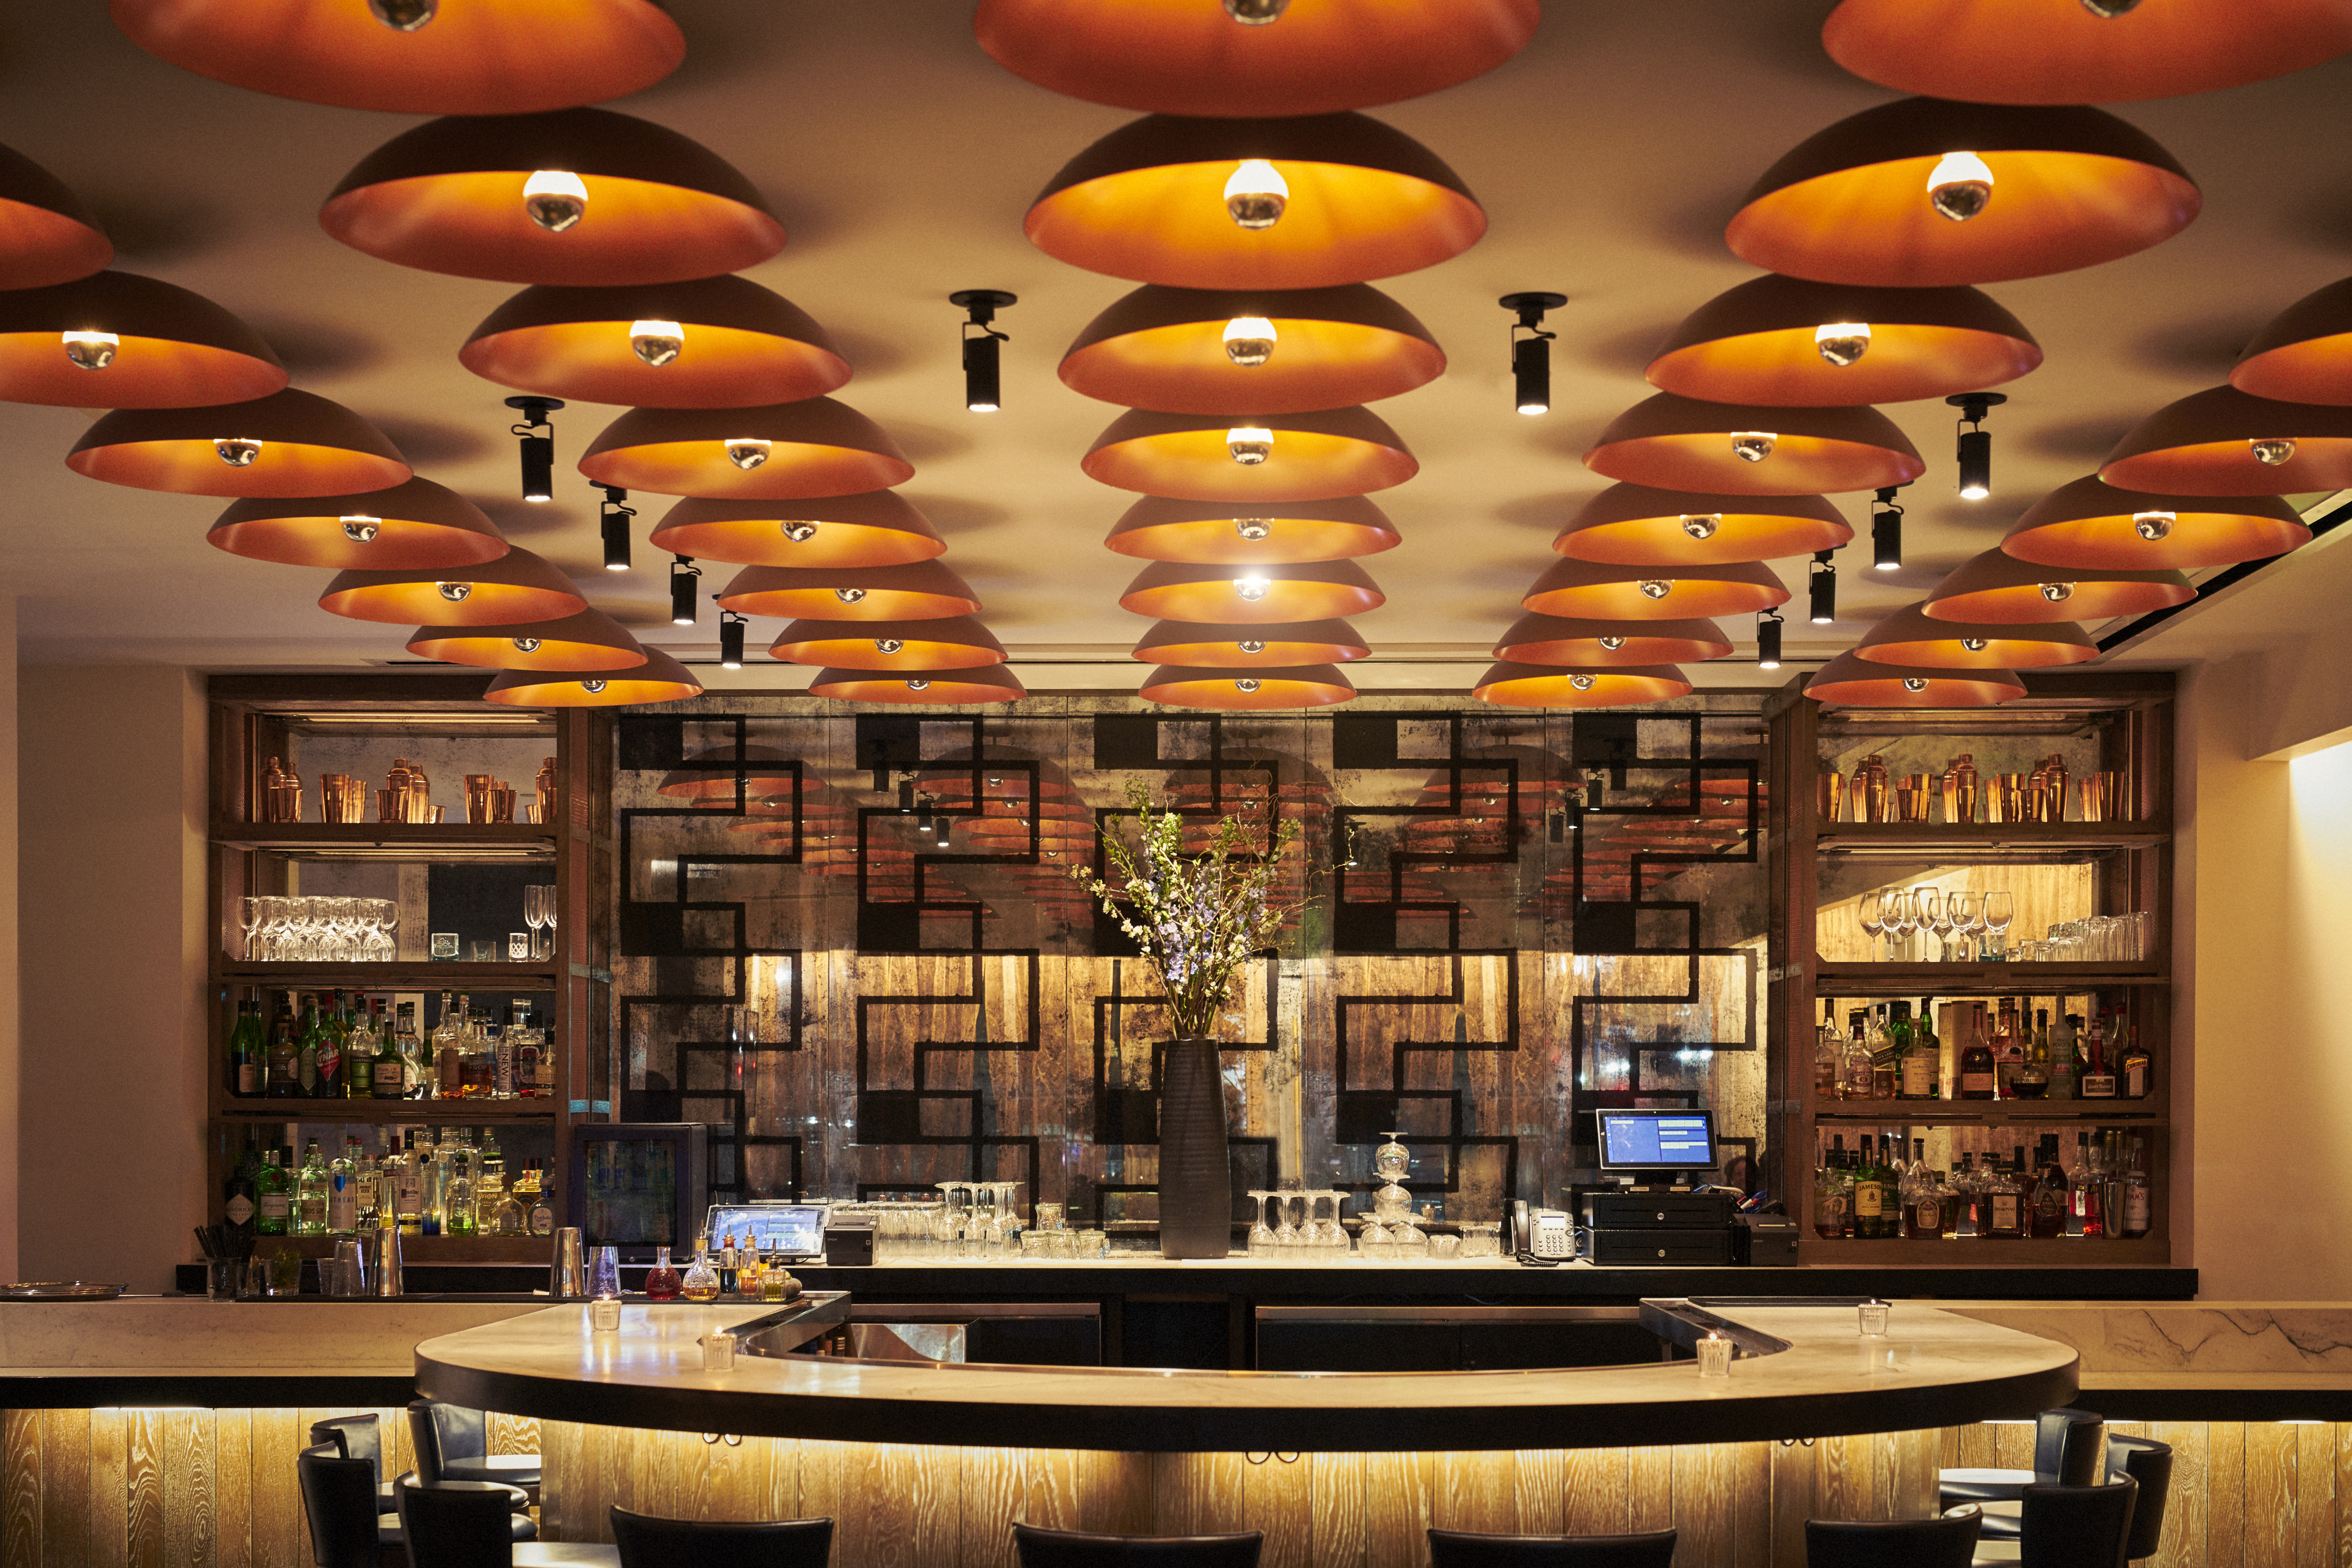  Jayne Restaurant Circular Bar with High Chairs and Golden Lighting